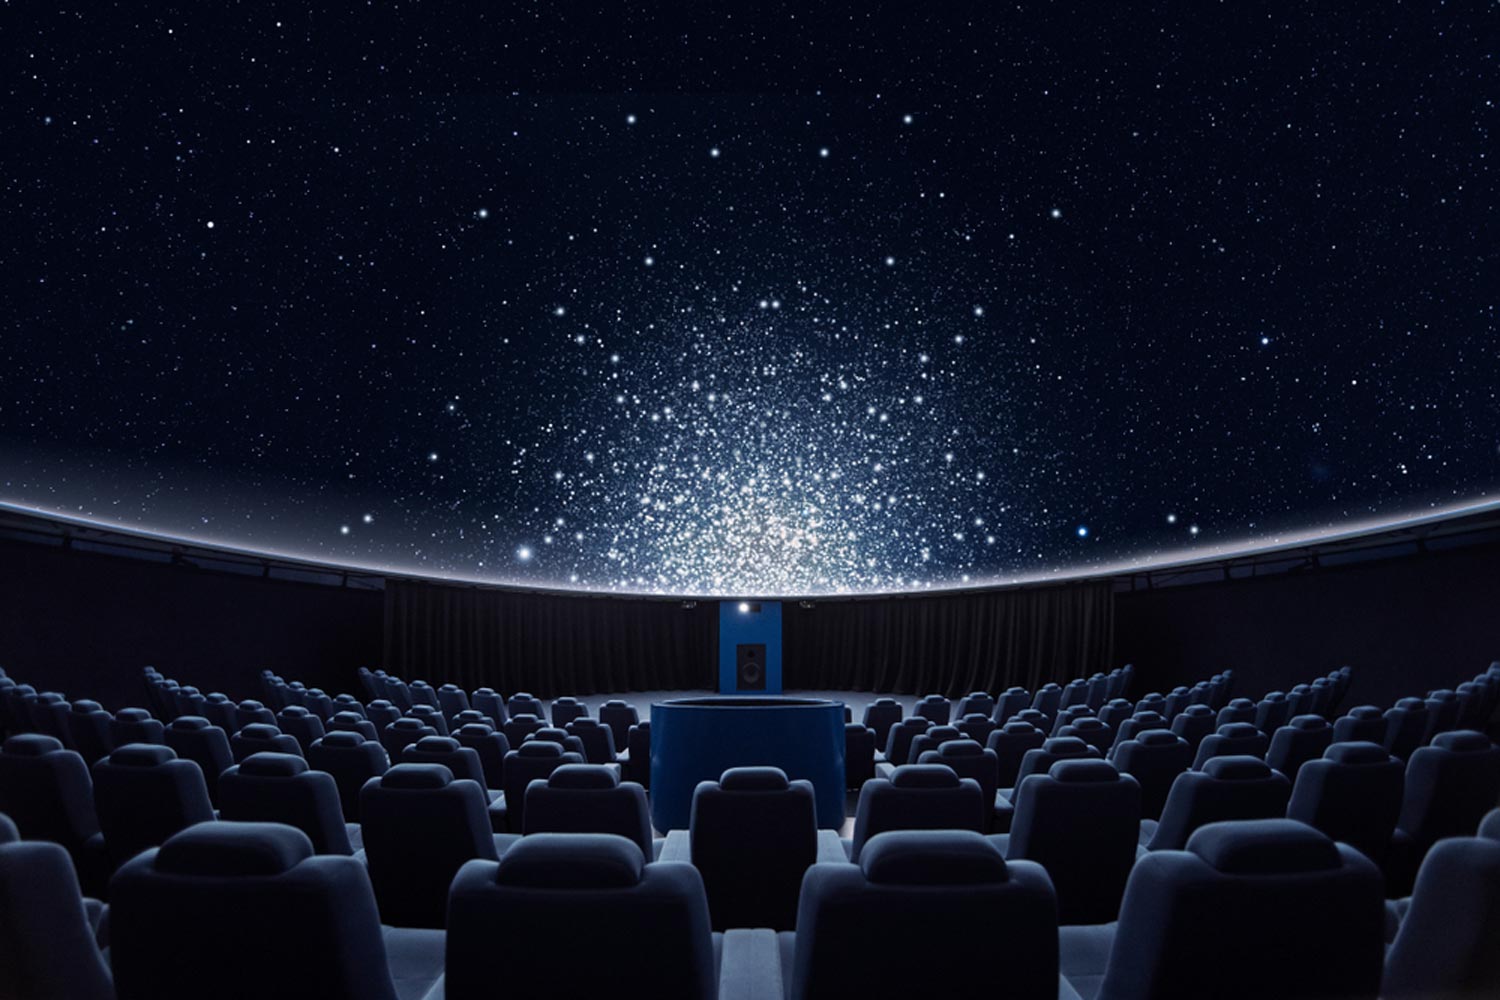 Al Thuraya Planetarium to screen 8 films in March